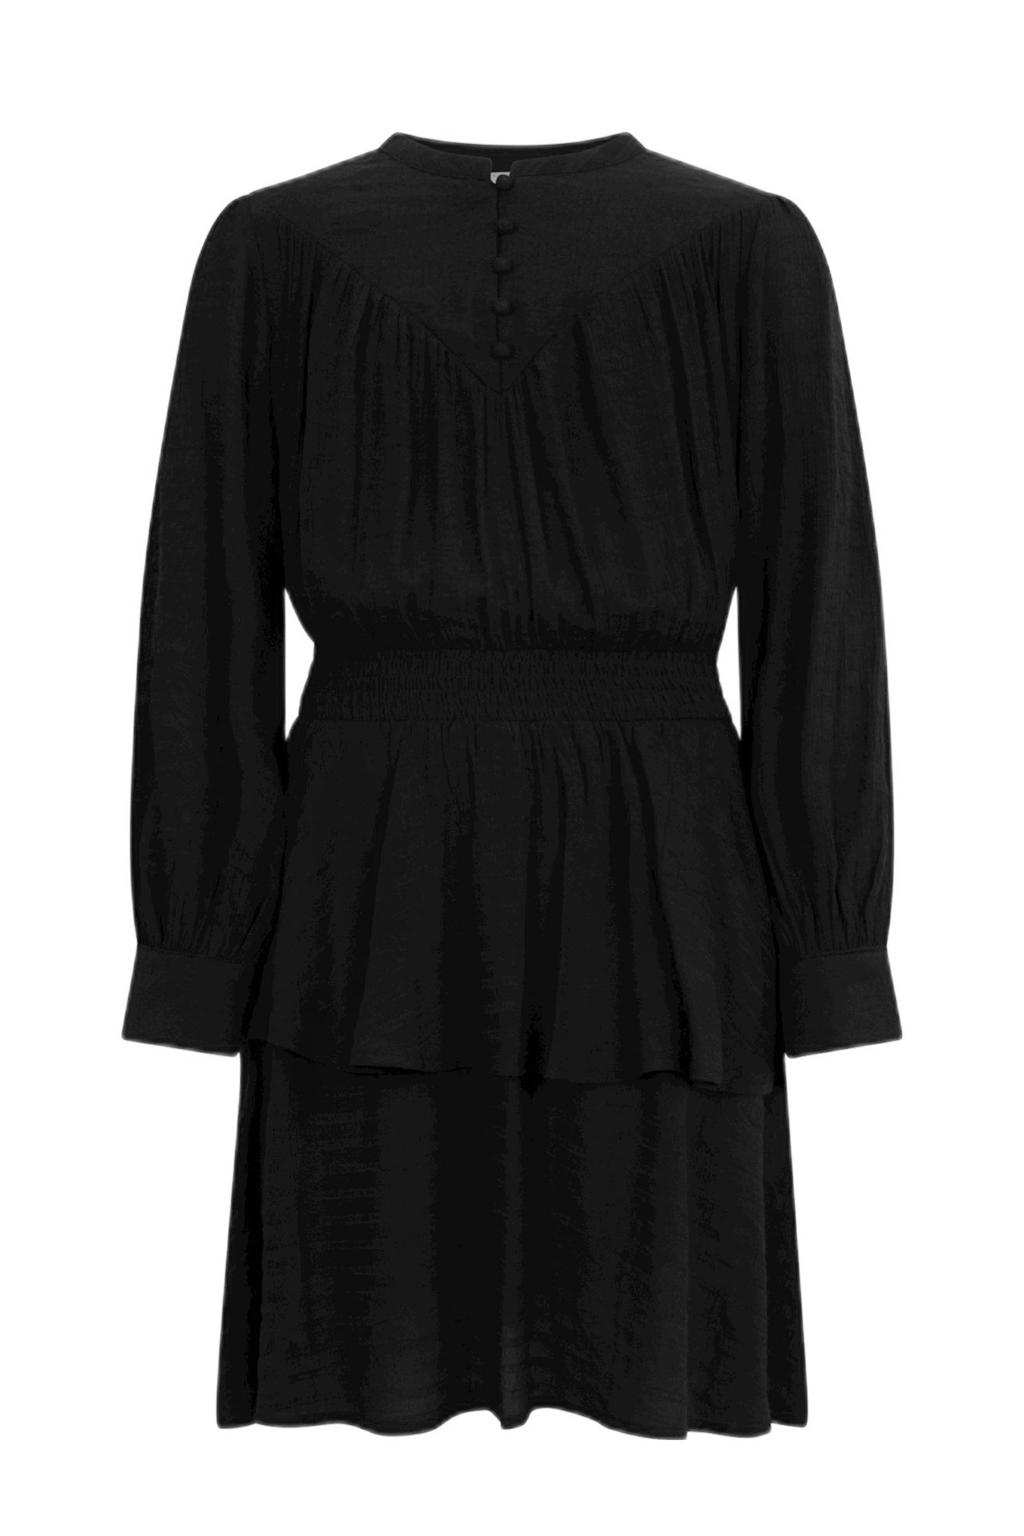 Zwarte meisjes AI&KO jurk Damara van viscose met lange mouwen, ronde hals, knoopsluiting en smockwerk